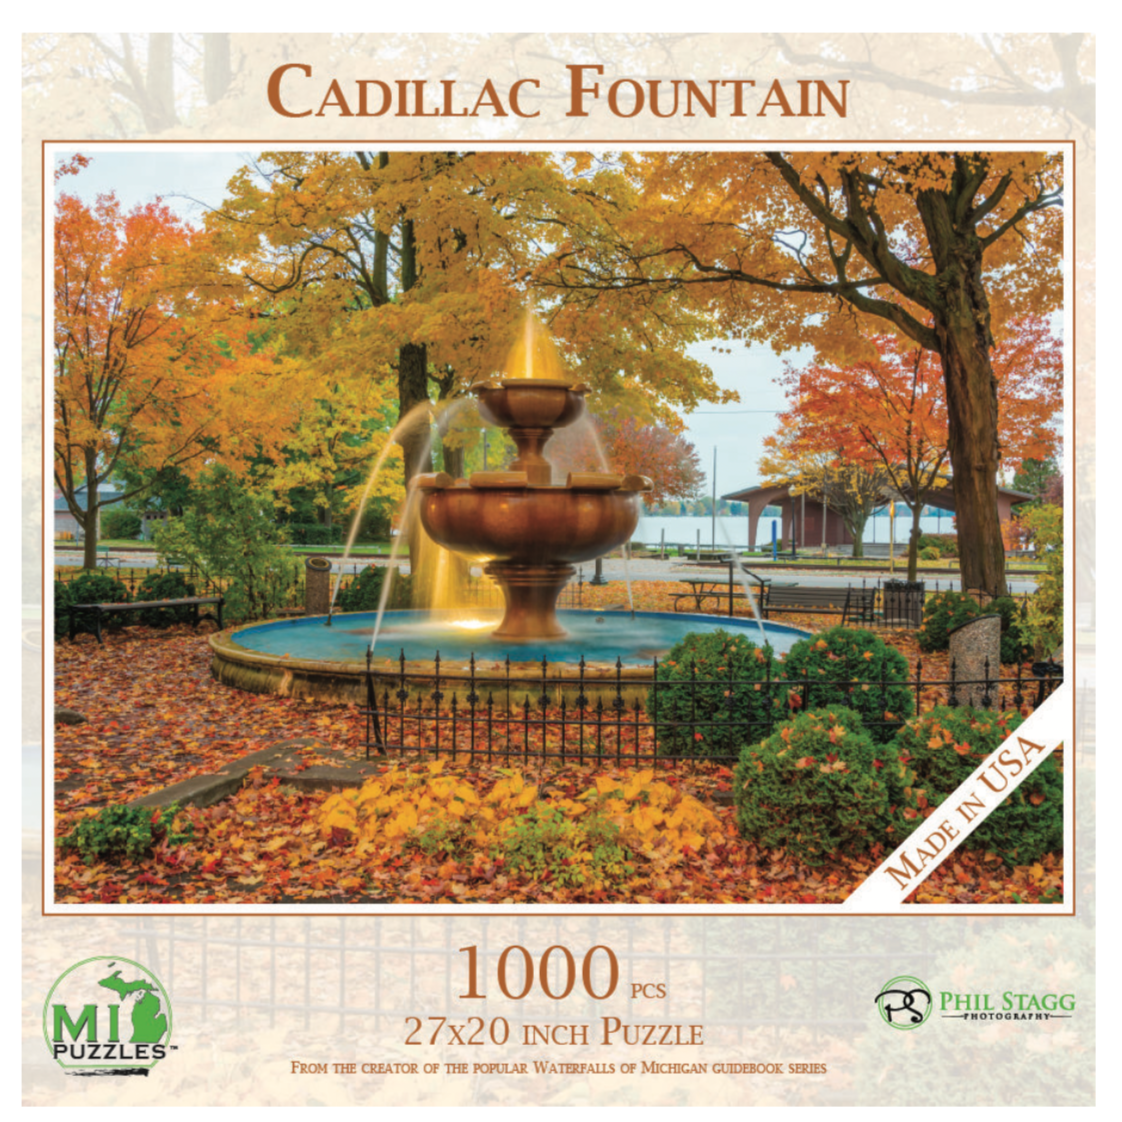 Cadillac Fountain 1000 pc Jigsaw Puzzle